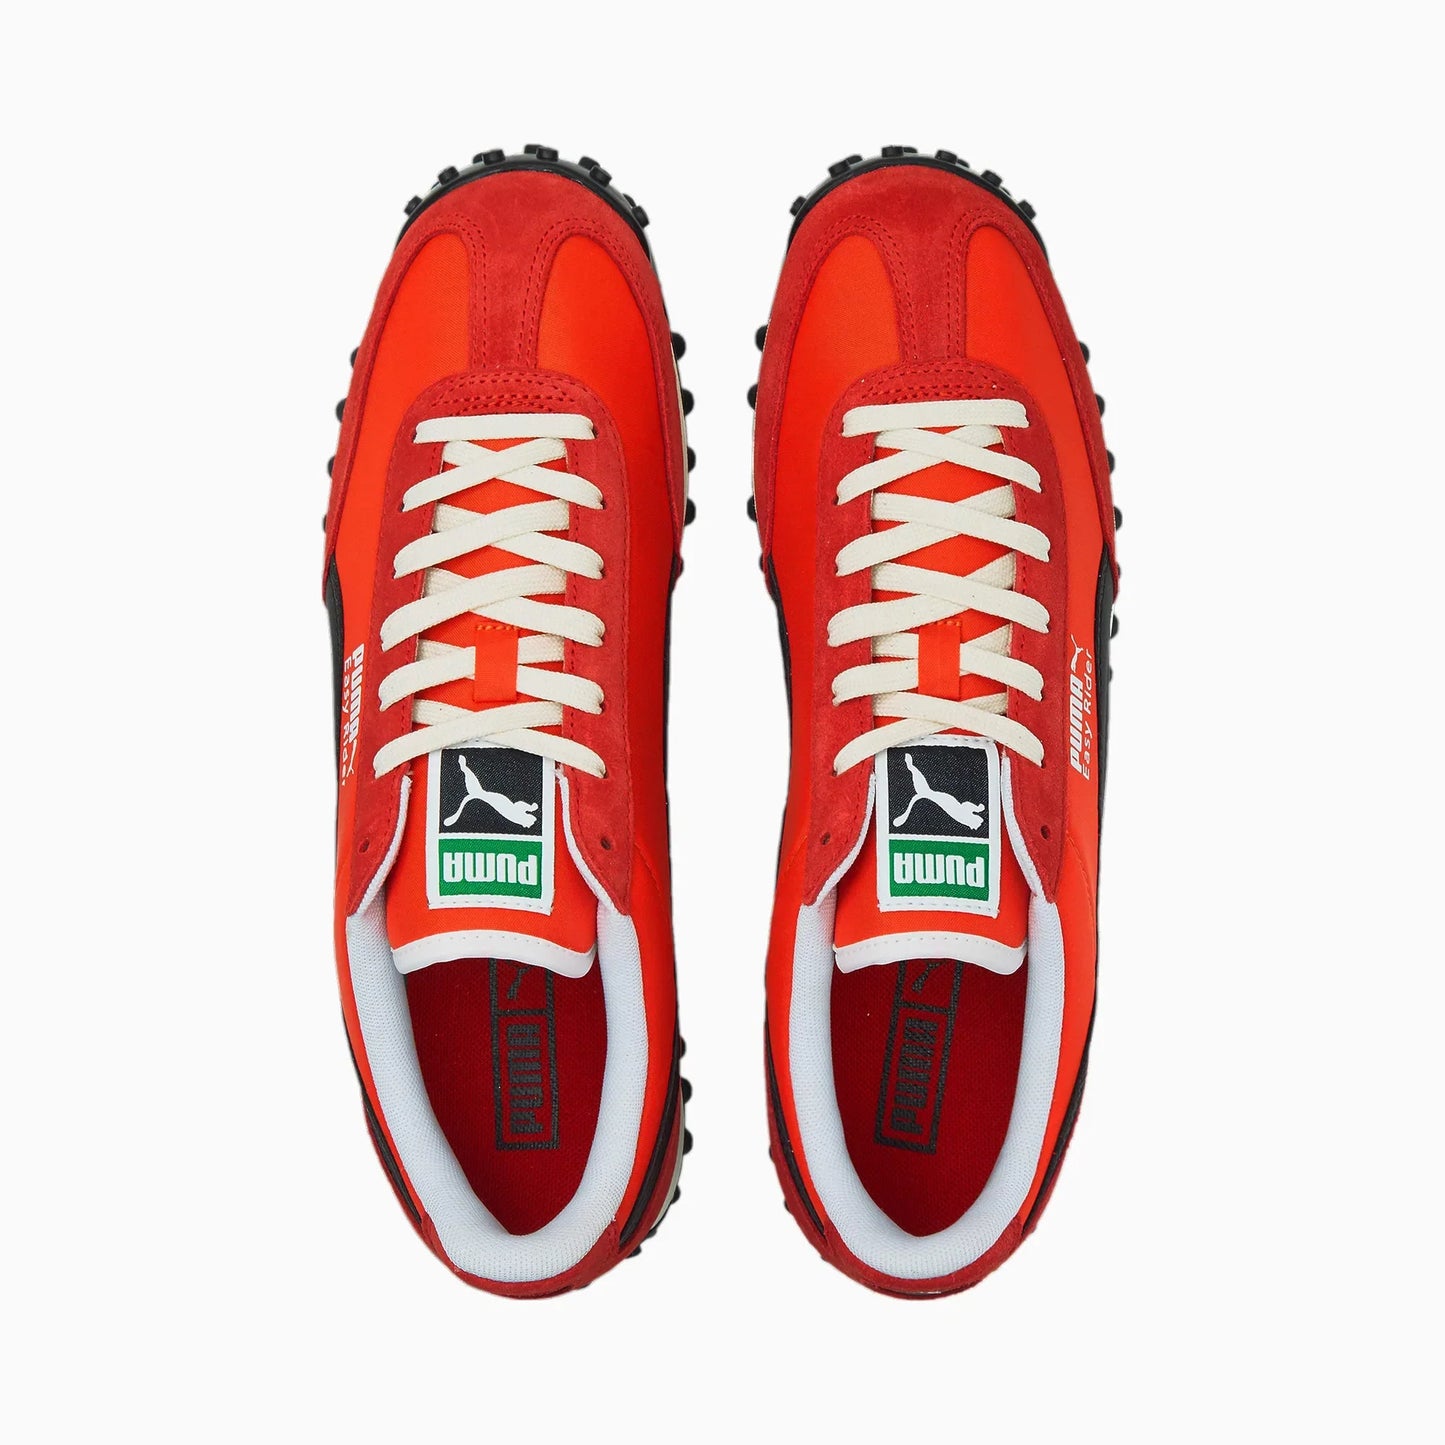 Puma Men's Easy Rider II High Risk Red Cherry Tomato 70s New Retro Shoes Sneakers 381026-06